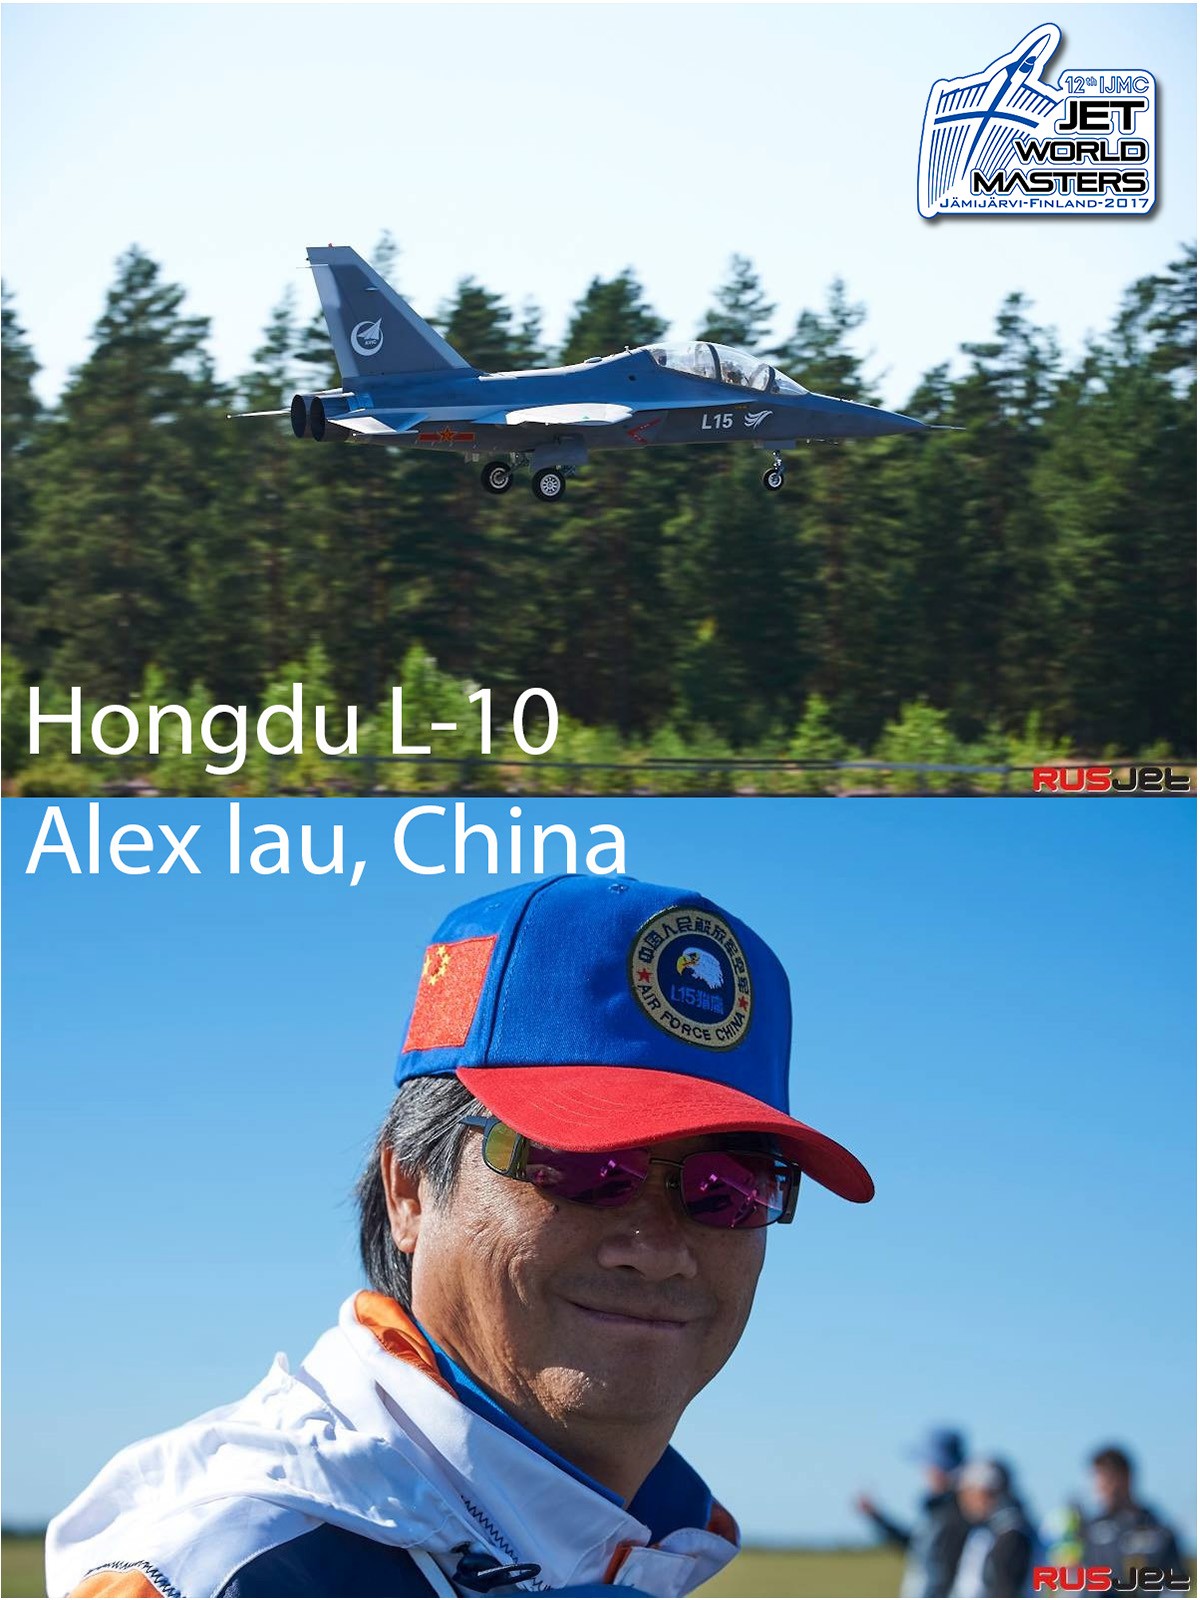 China Alex lau.jpg(256 KB)